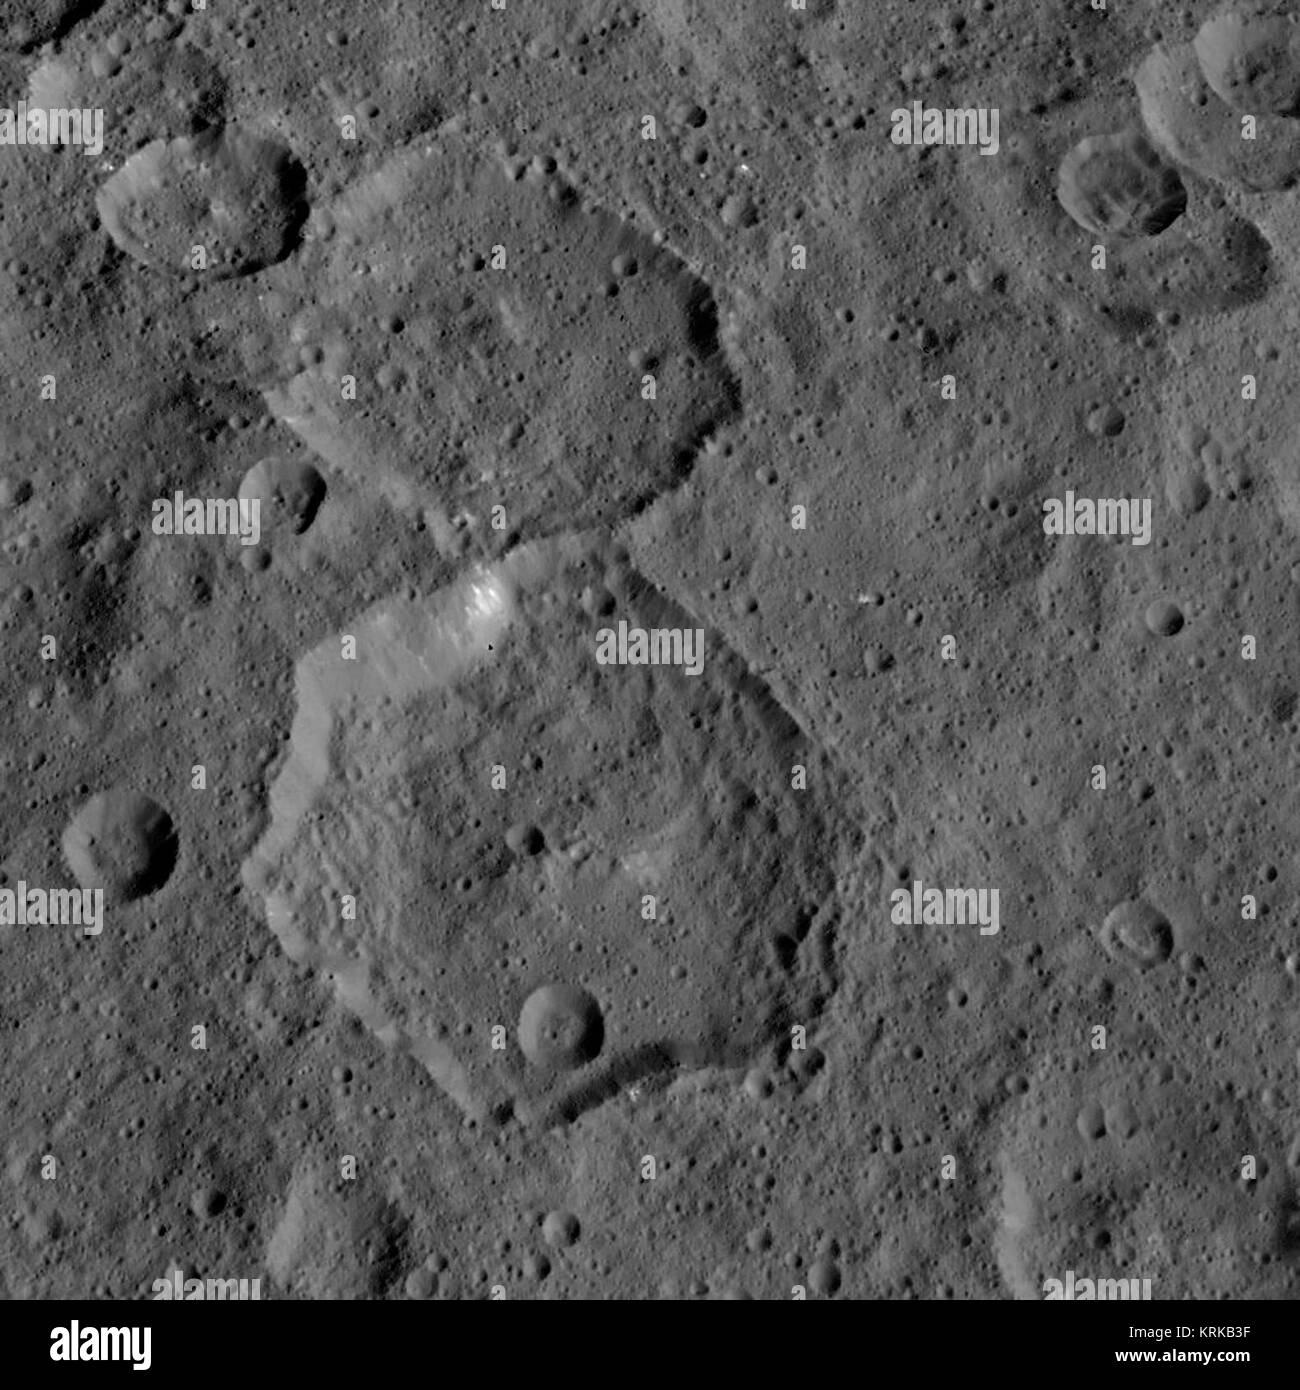 PIA19908-Ceres-DwarfPlanet-Dawn-3rdMapOrbit-HAMO-imagen30-20150909 Foto de stock